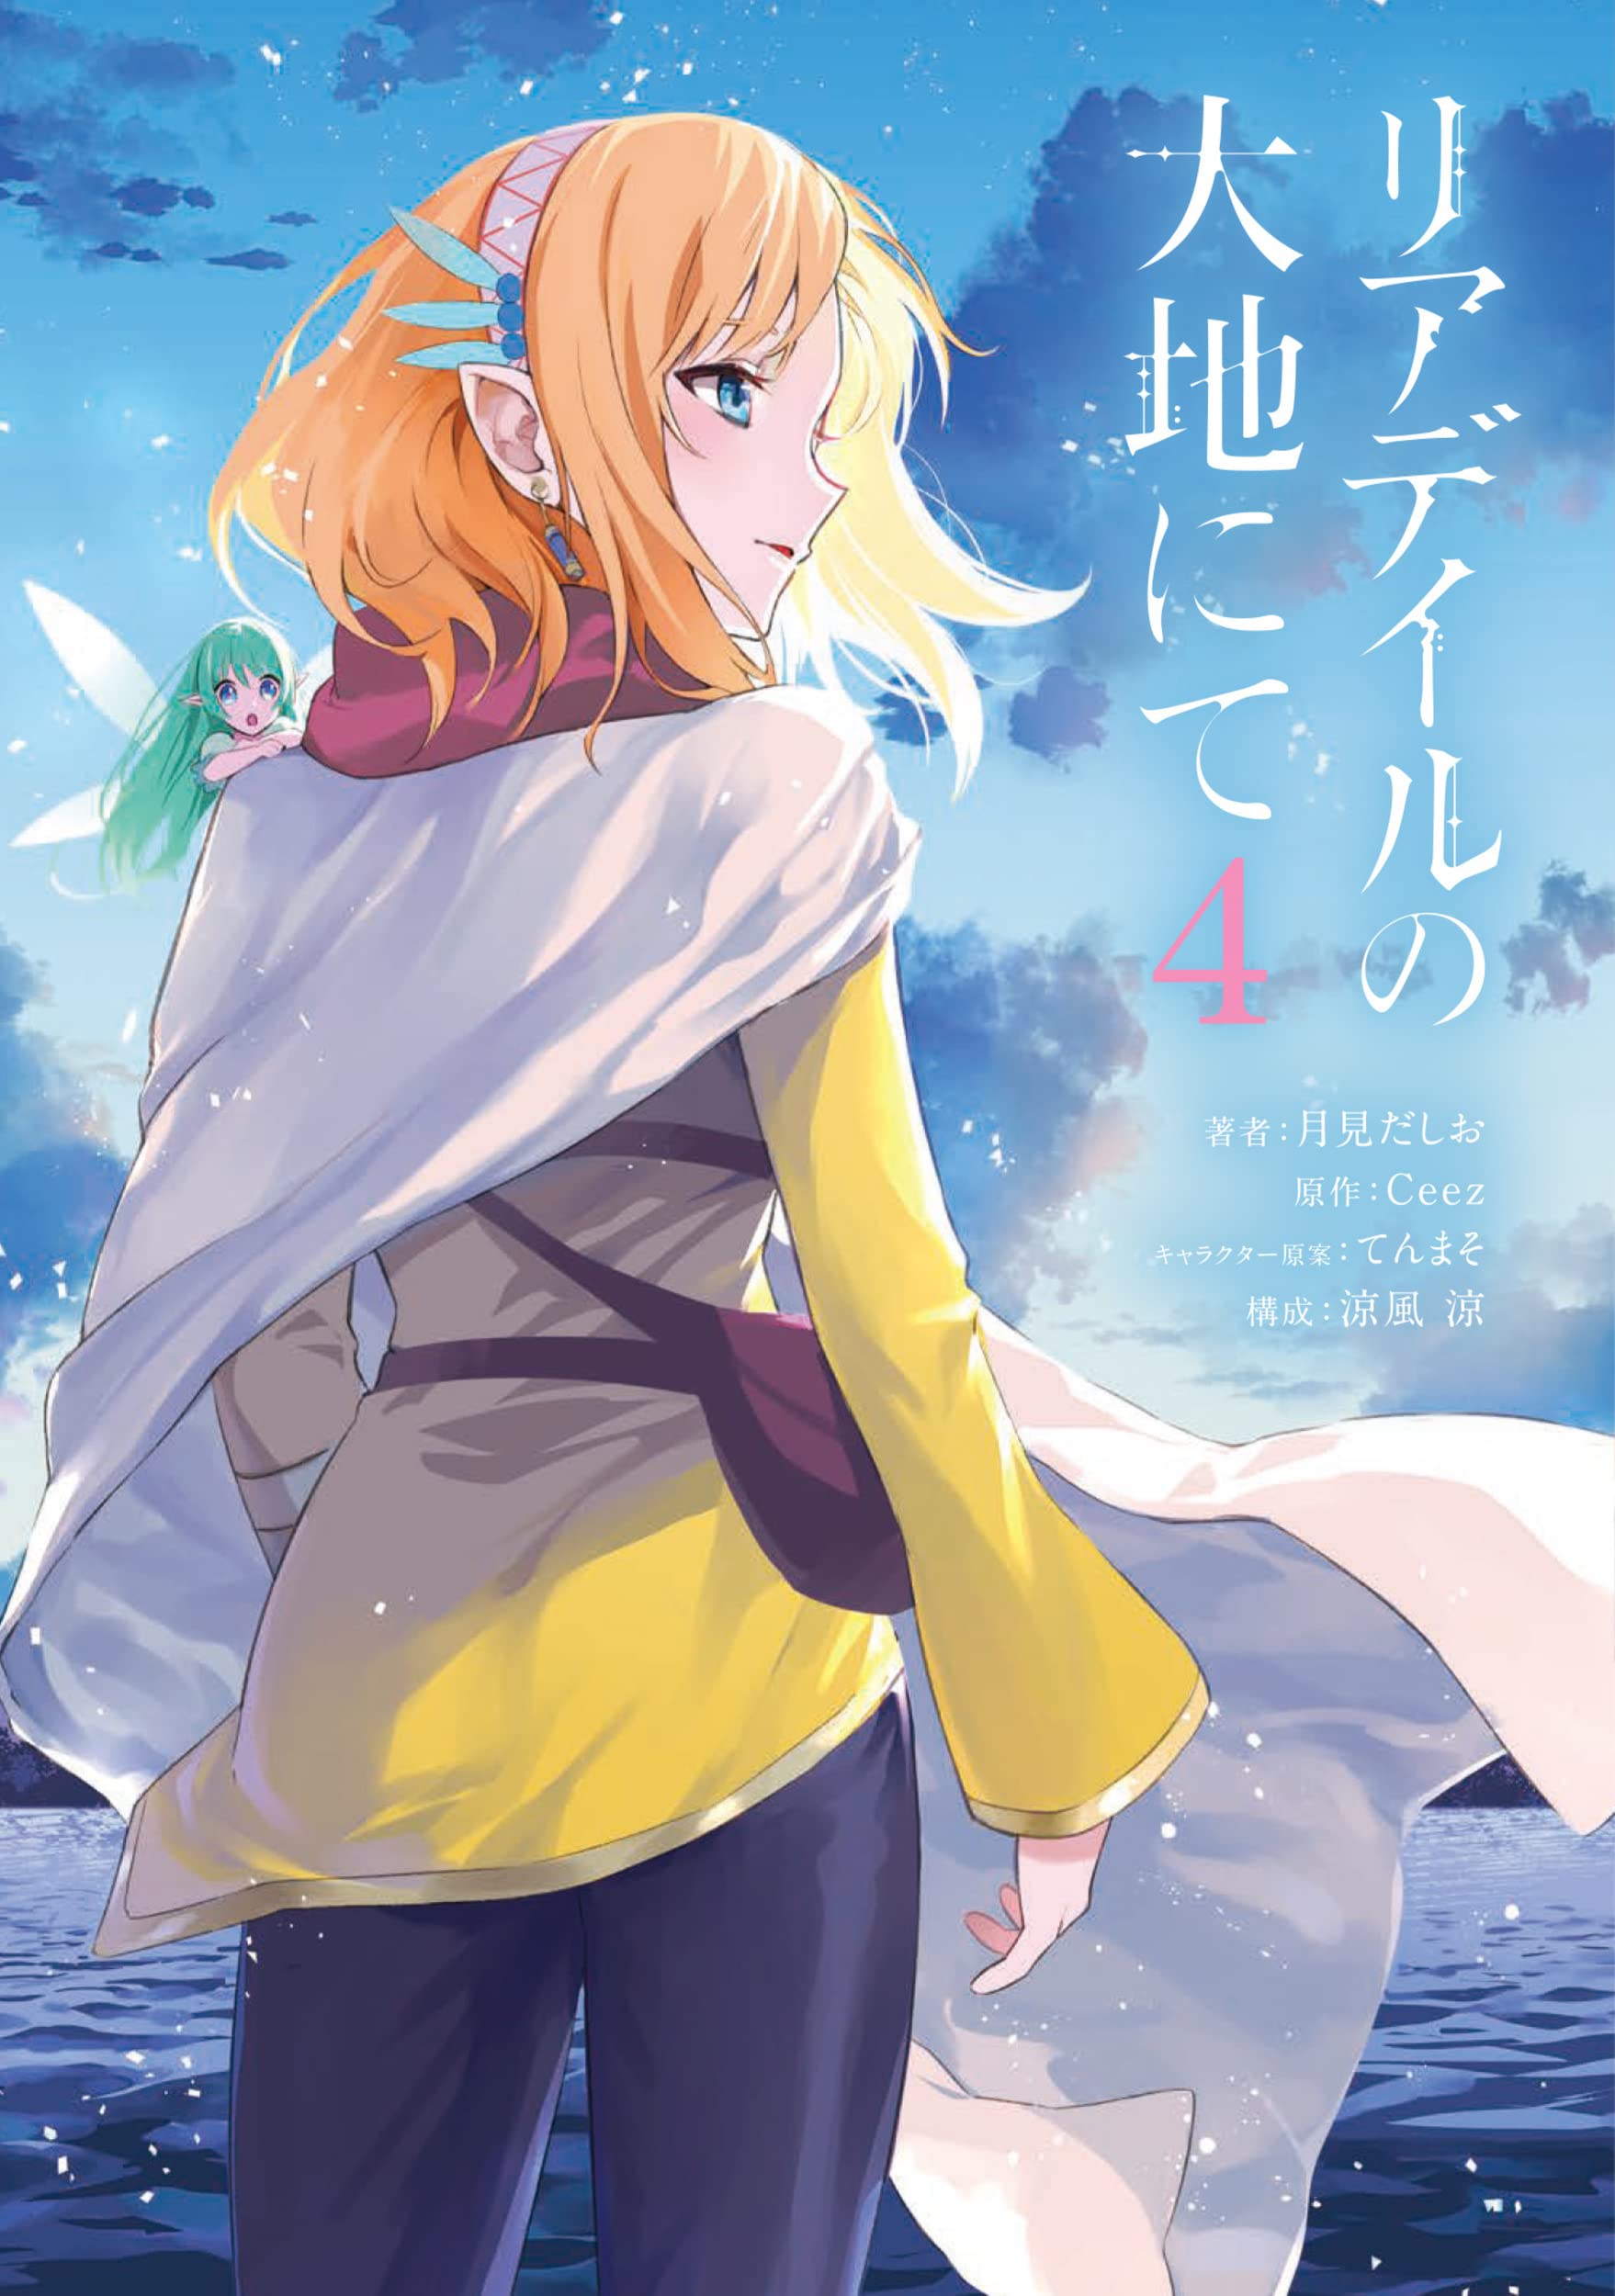 El anime Leadale no Daichi nite tendrá 12 episodios — Kudasai